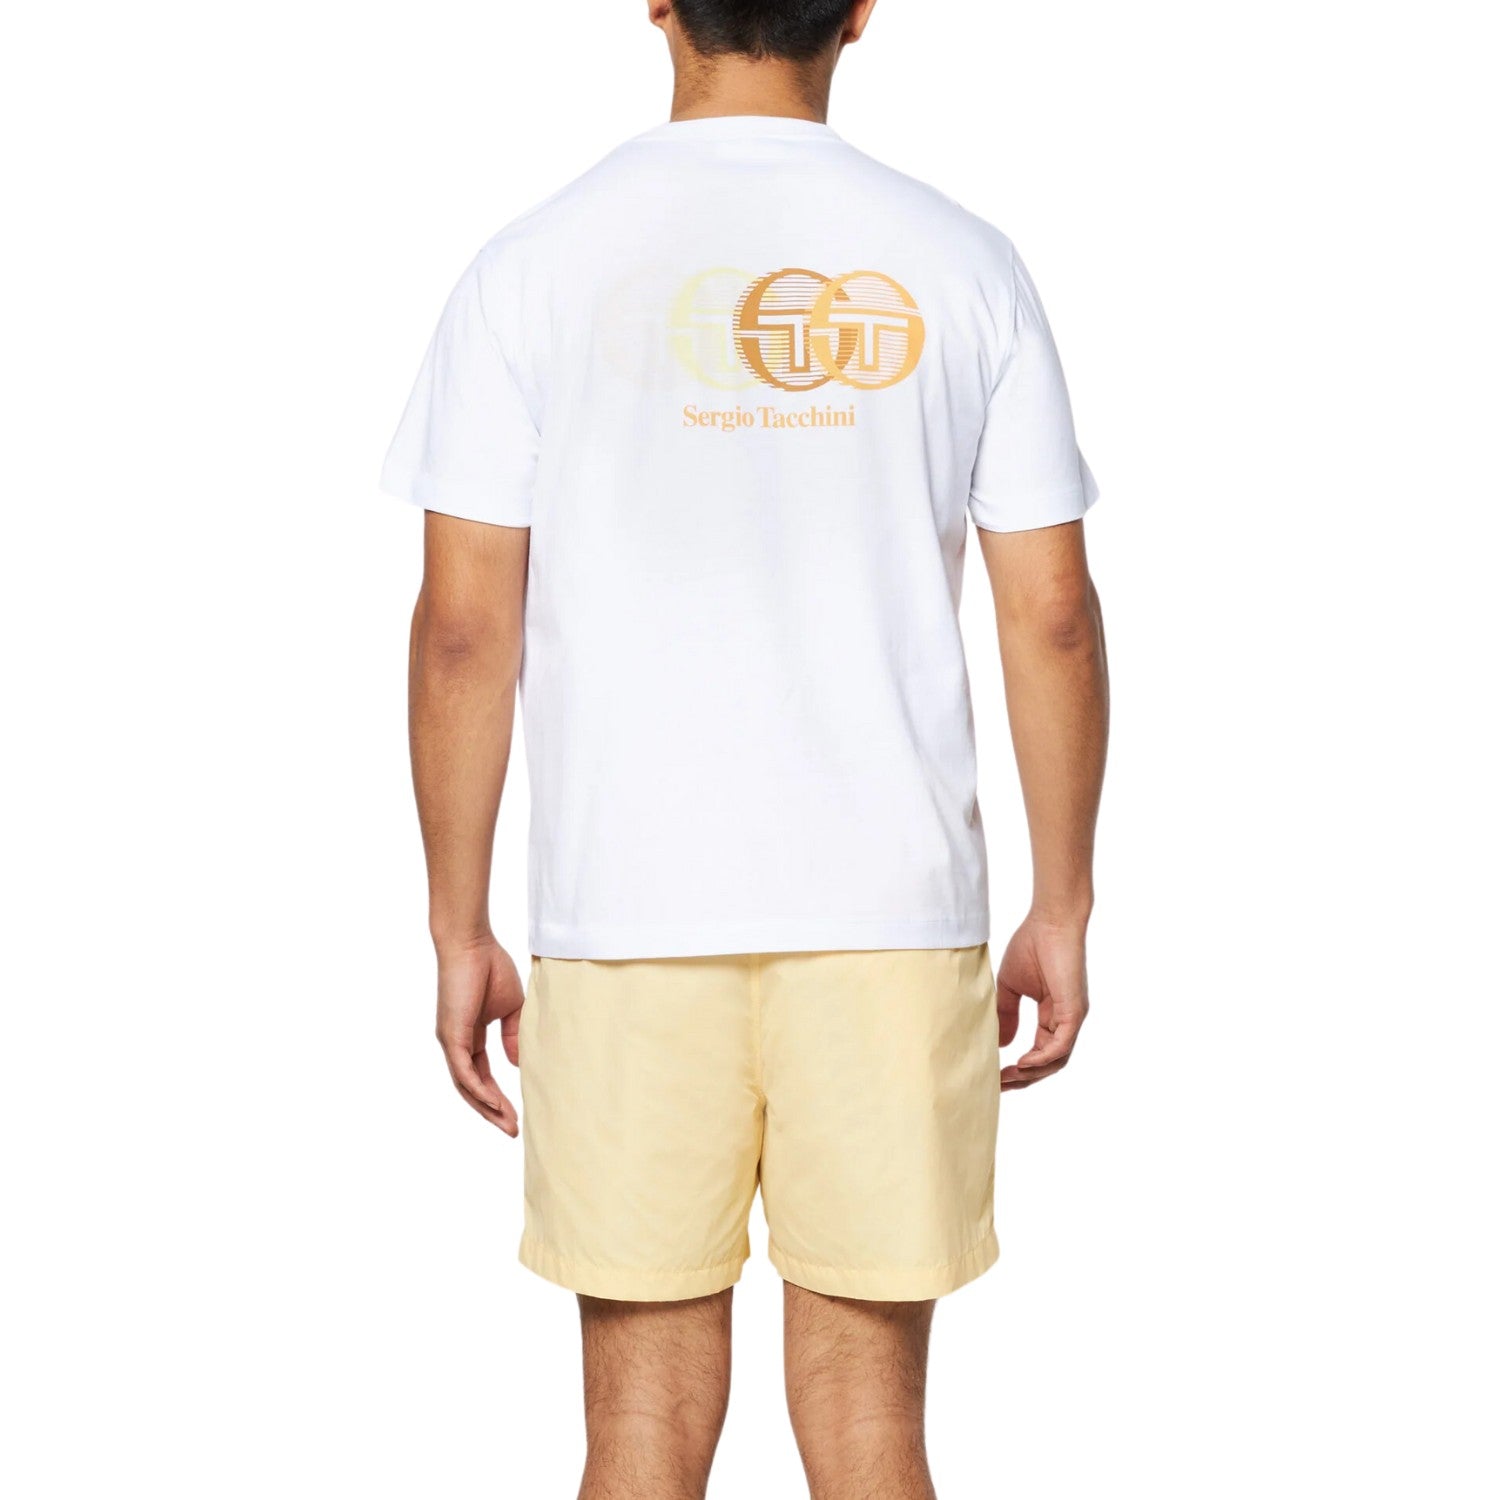 Sergio Tacchini Tenda T-shirt Mens Style : Sts24m50819